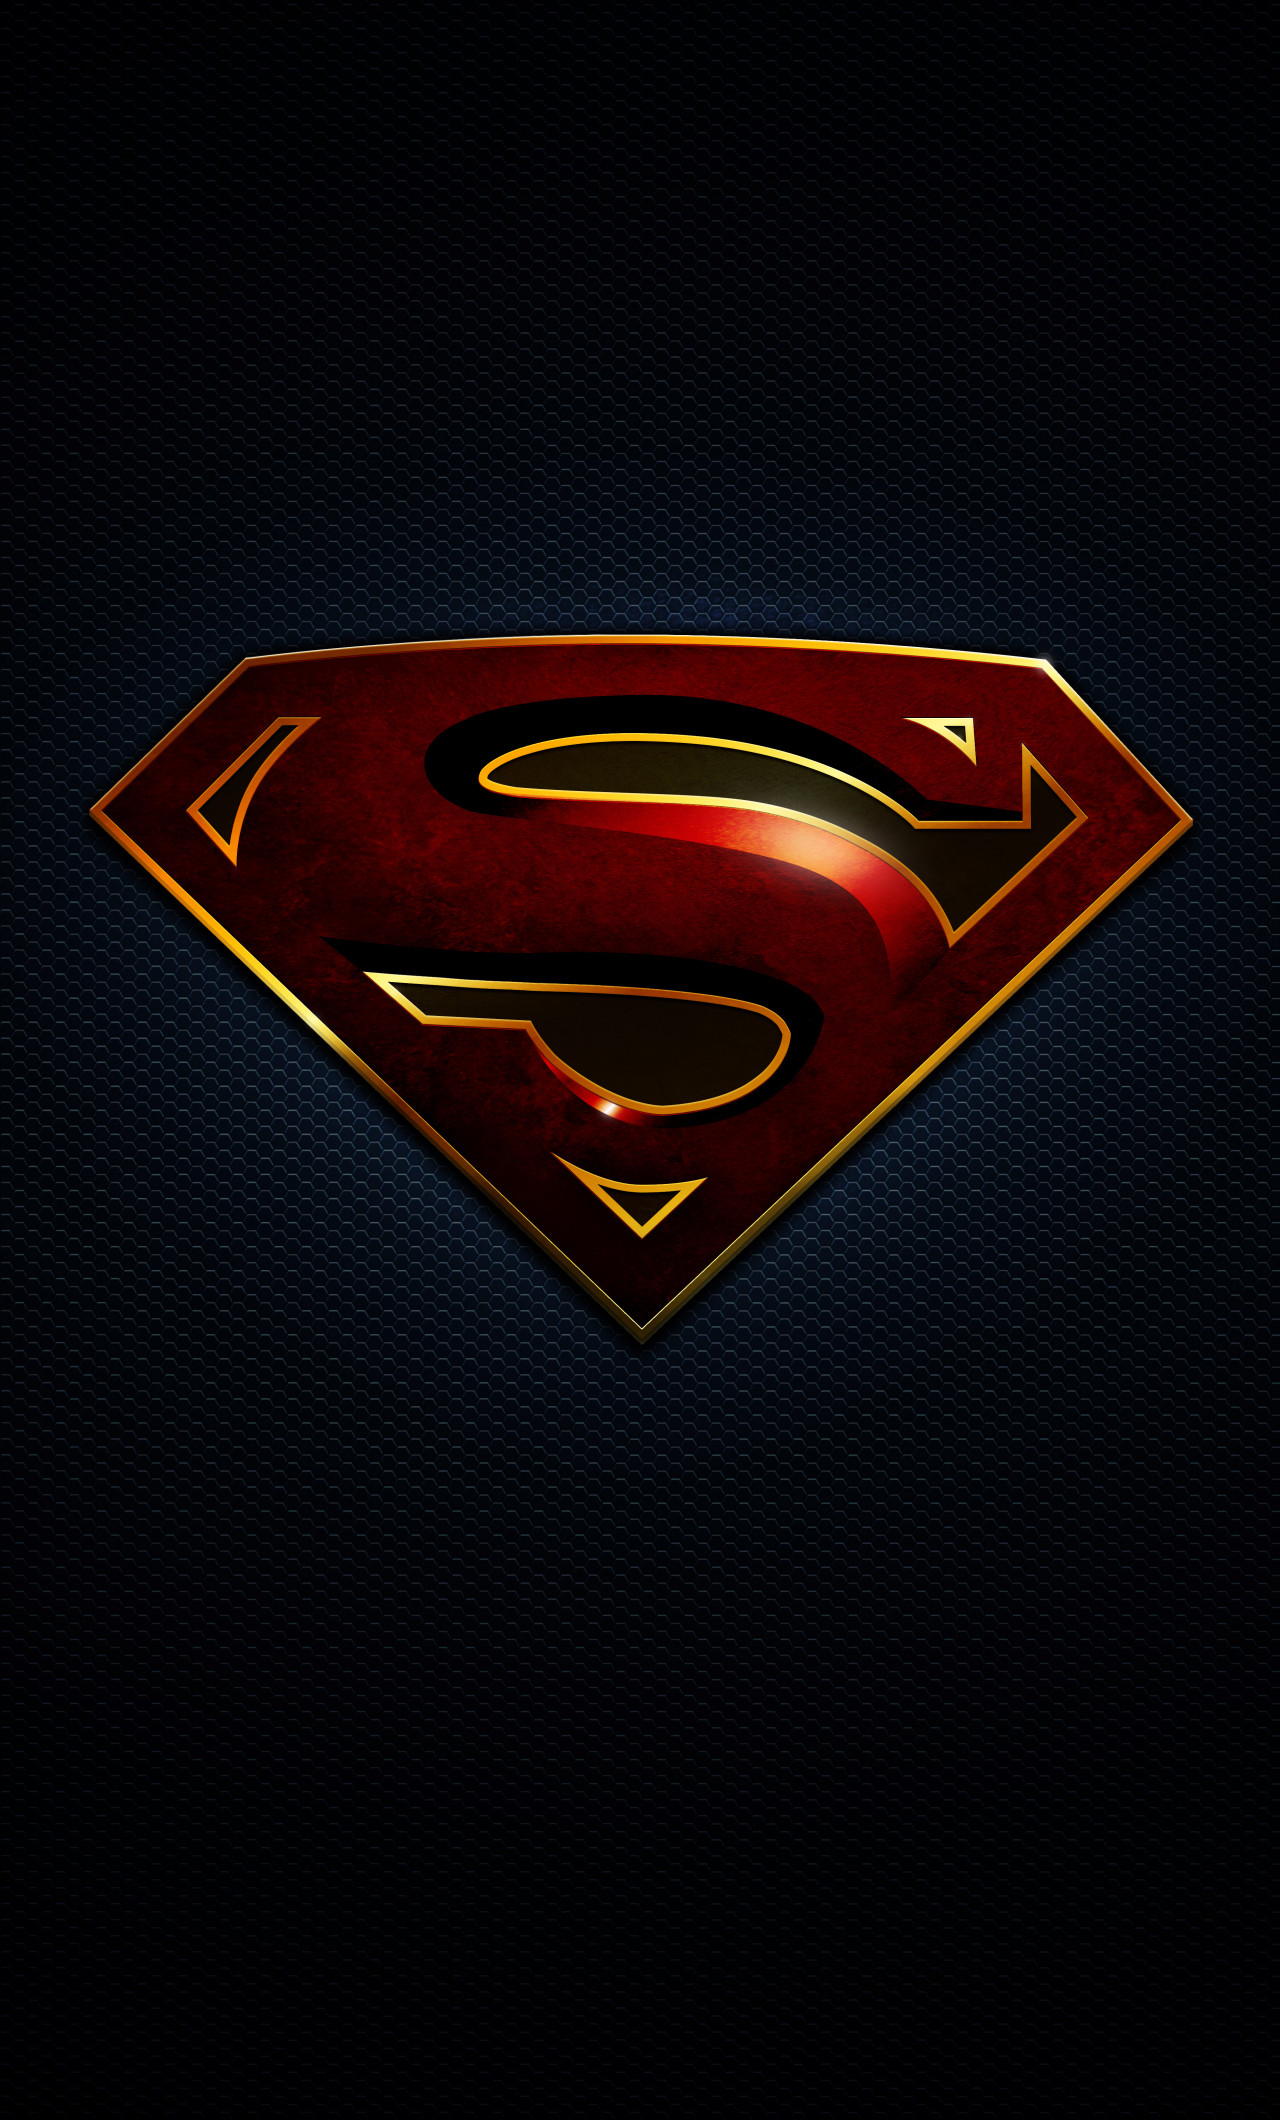 Superman Logo Wallpaper For Iphone - 1280x2120 Wallpaper 